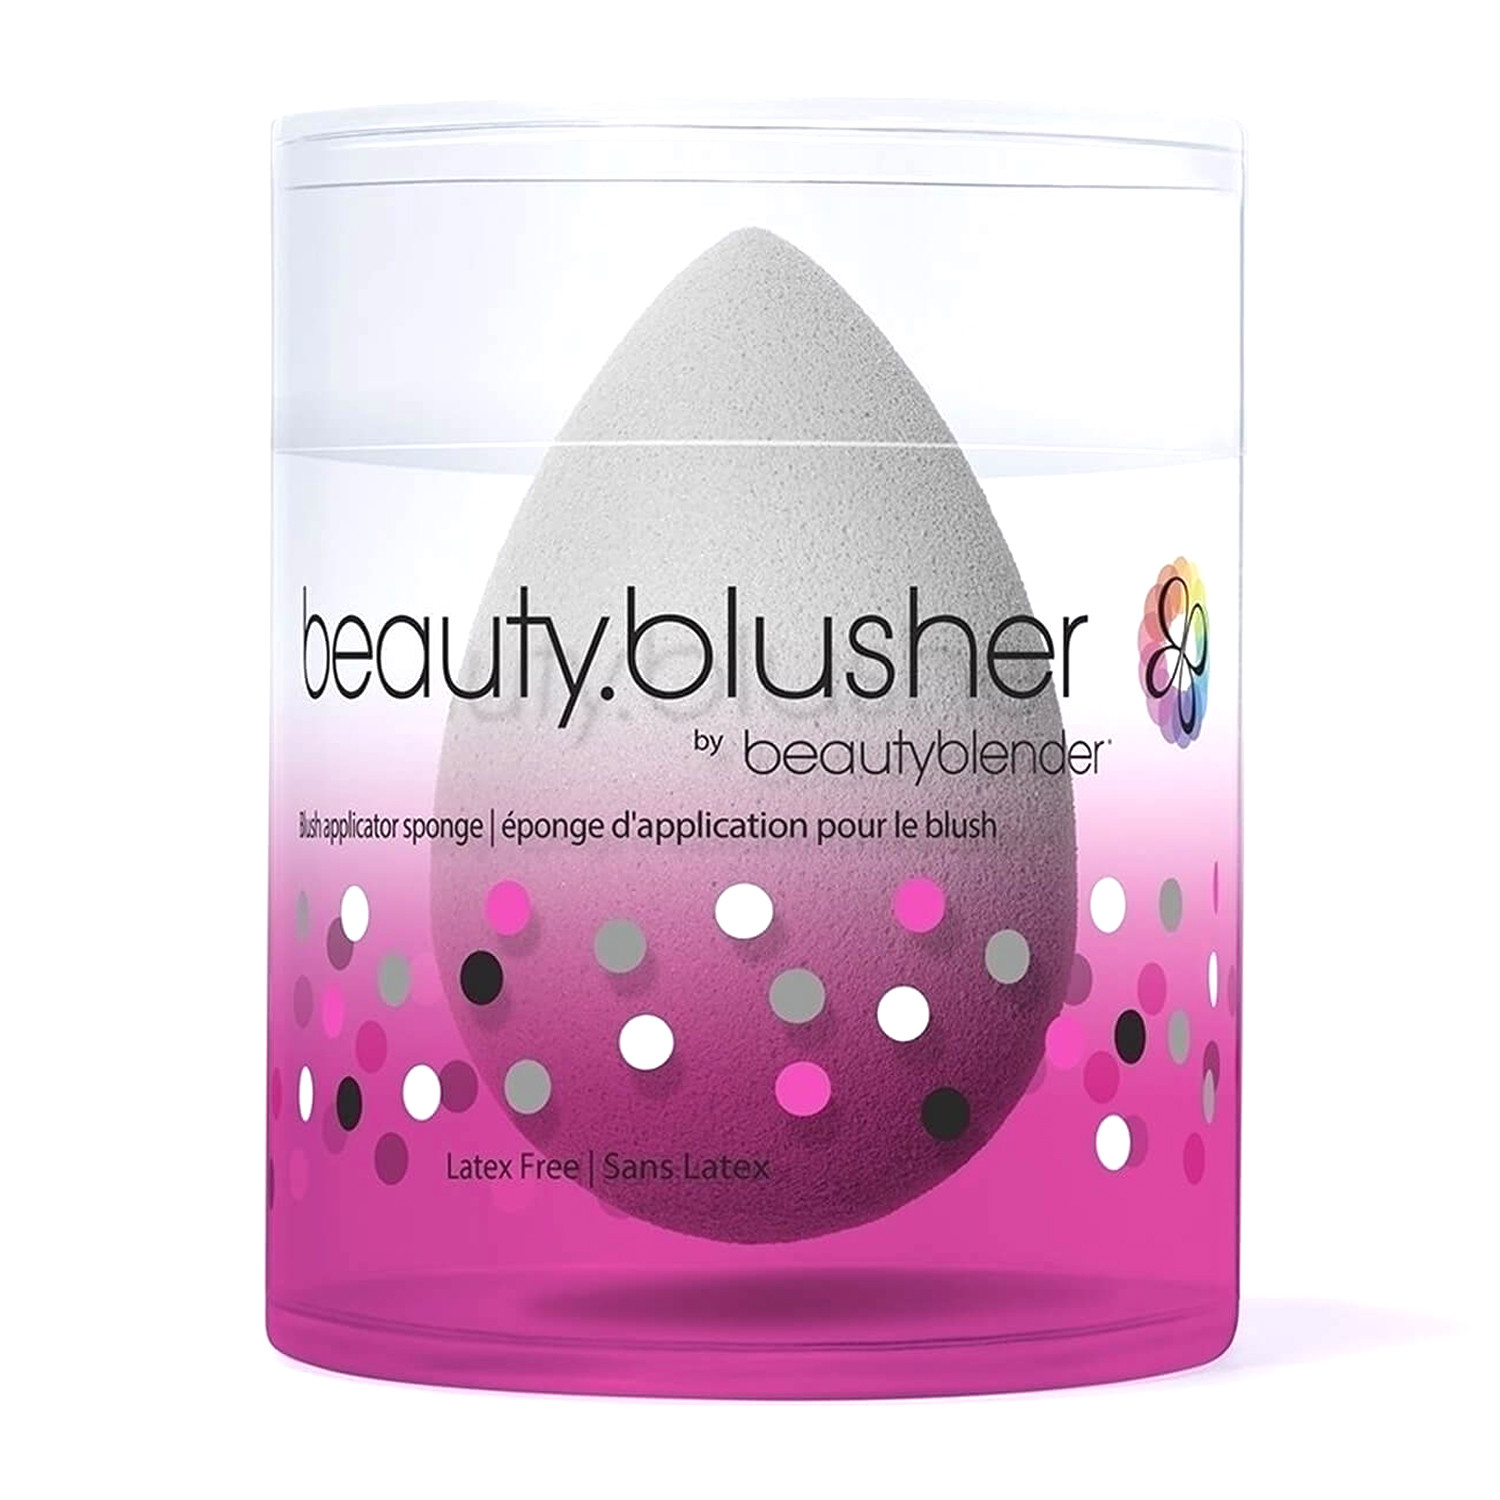 Спонж для макияжа Beautyblender Beauty.blusher